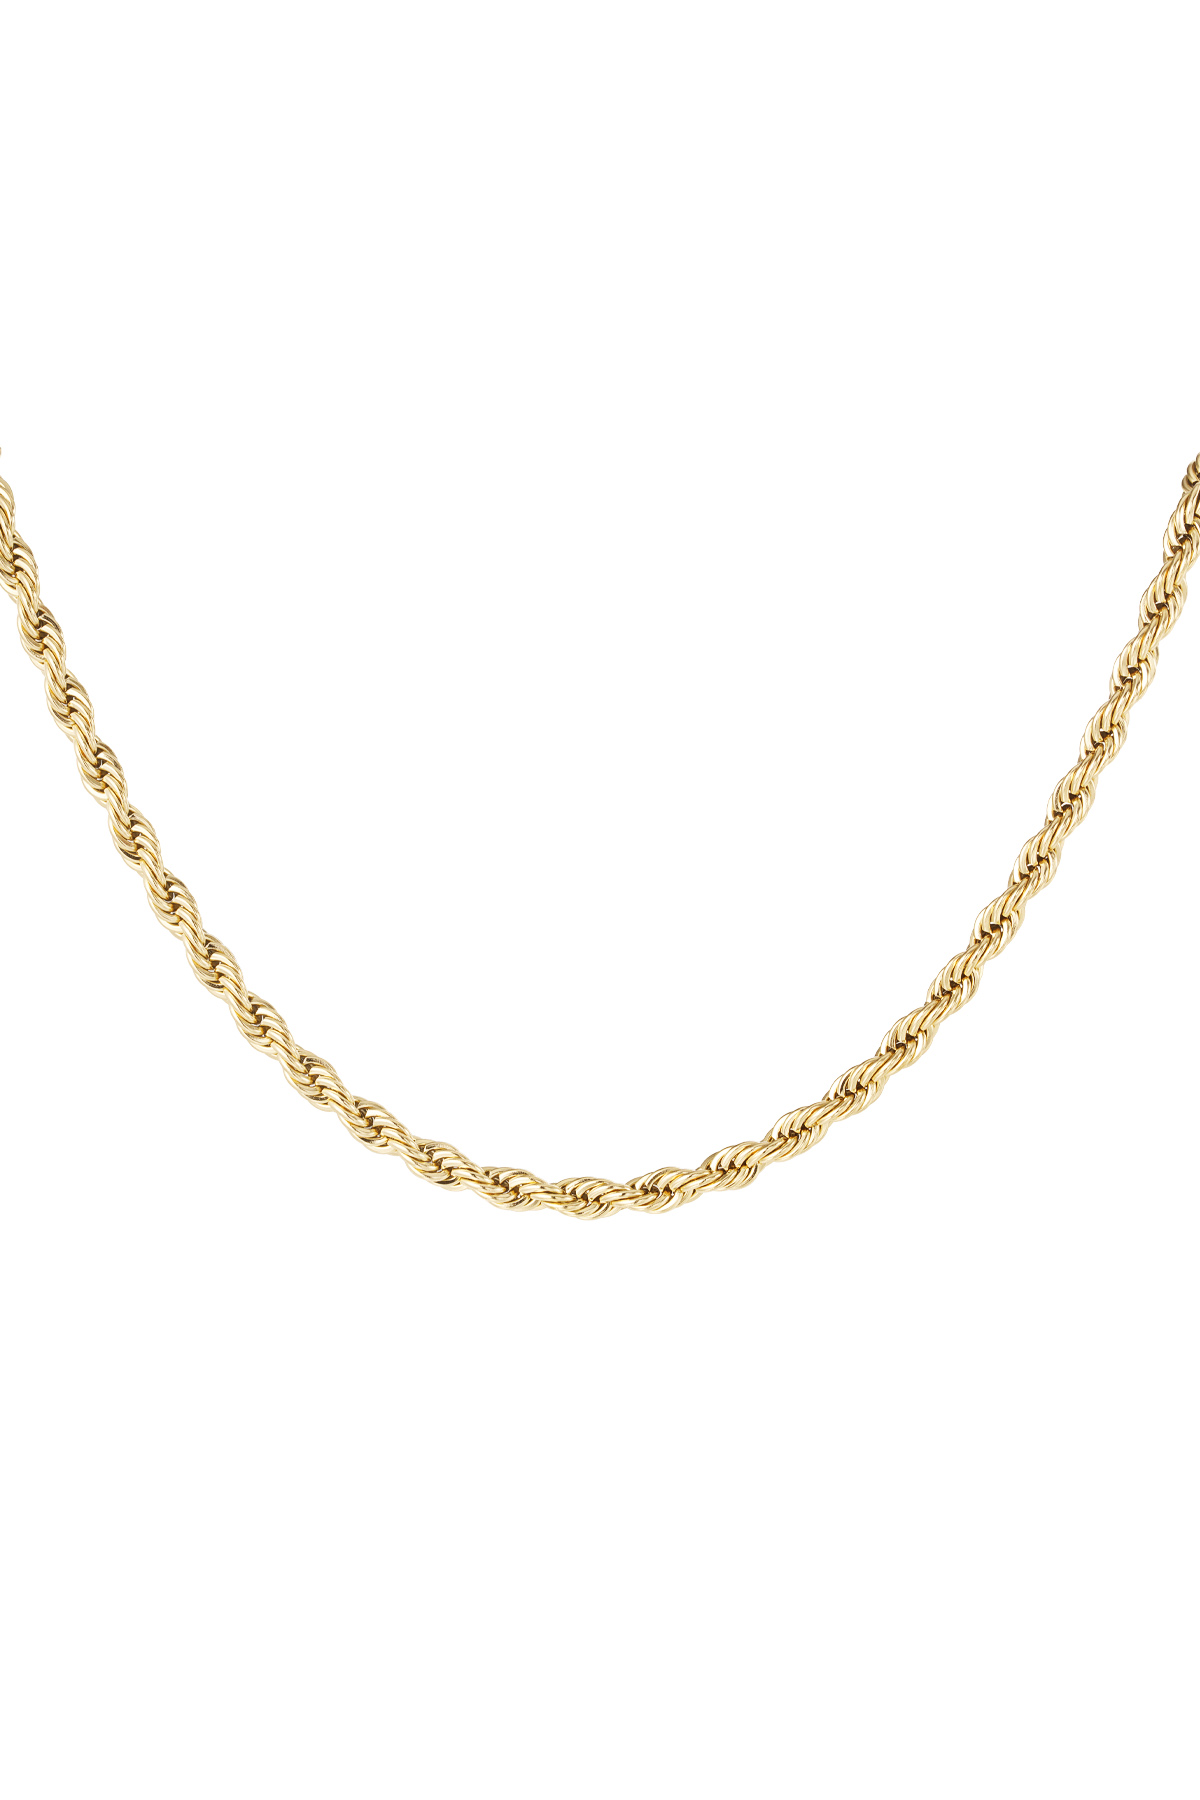 Unisex-Halskette dick gedreht kurz - Gold